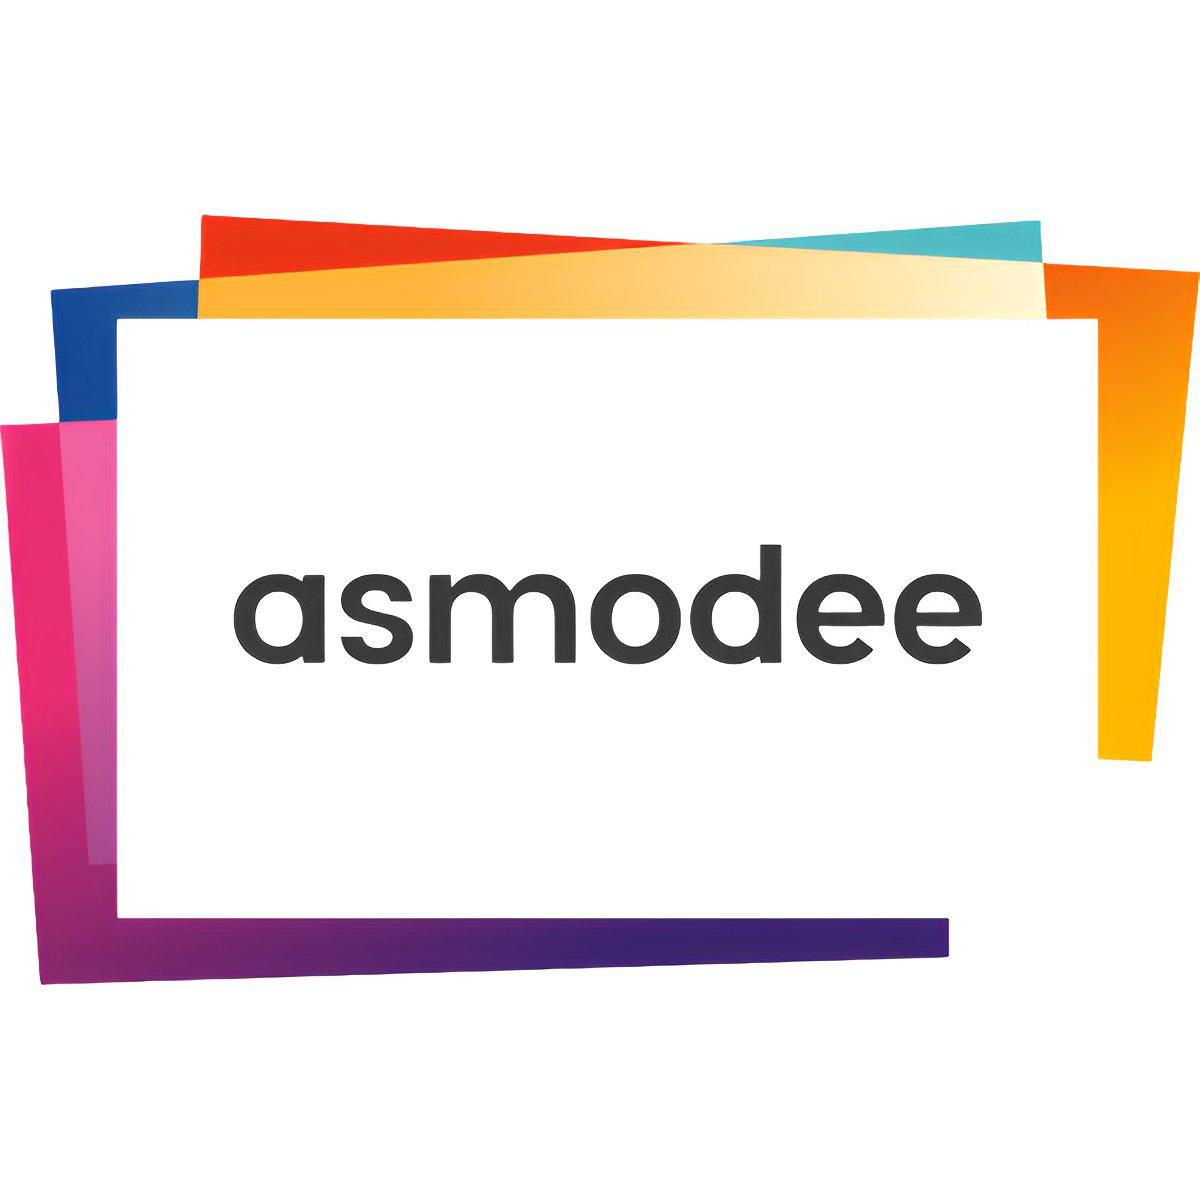 Asmodee Group